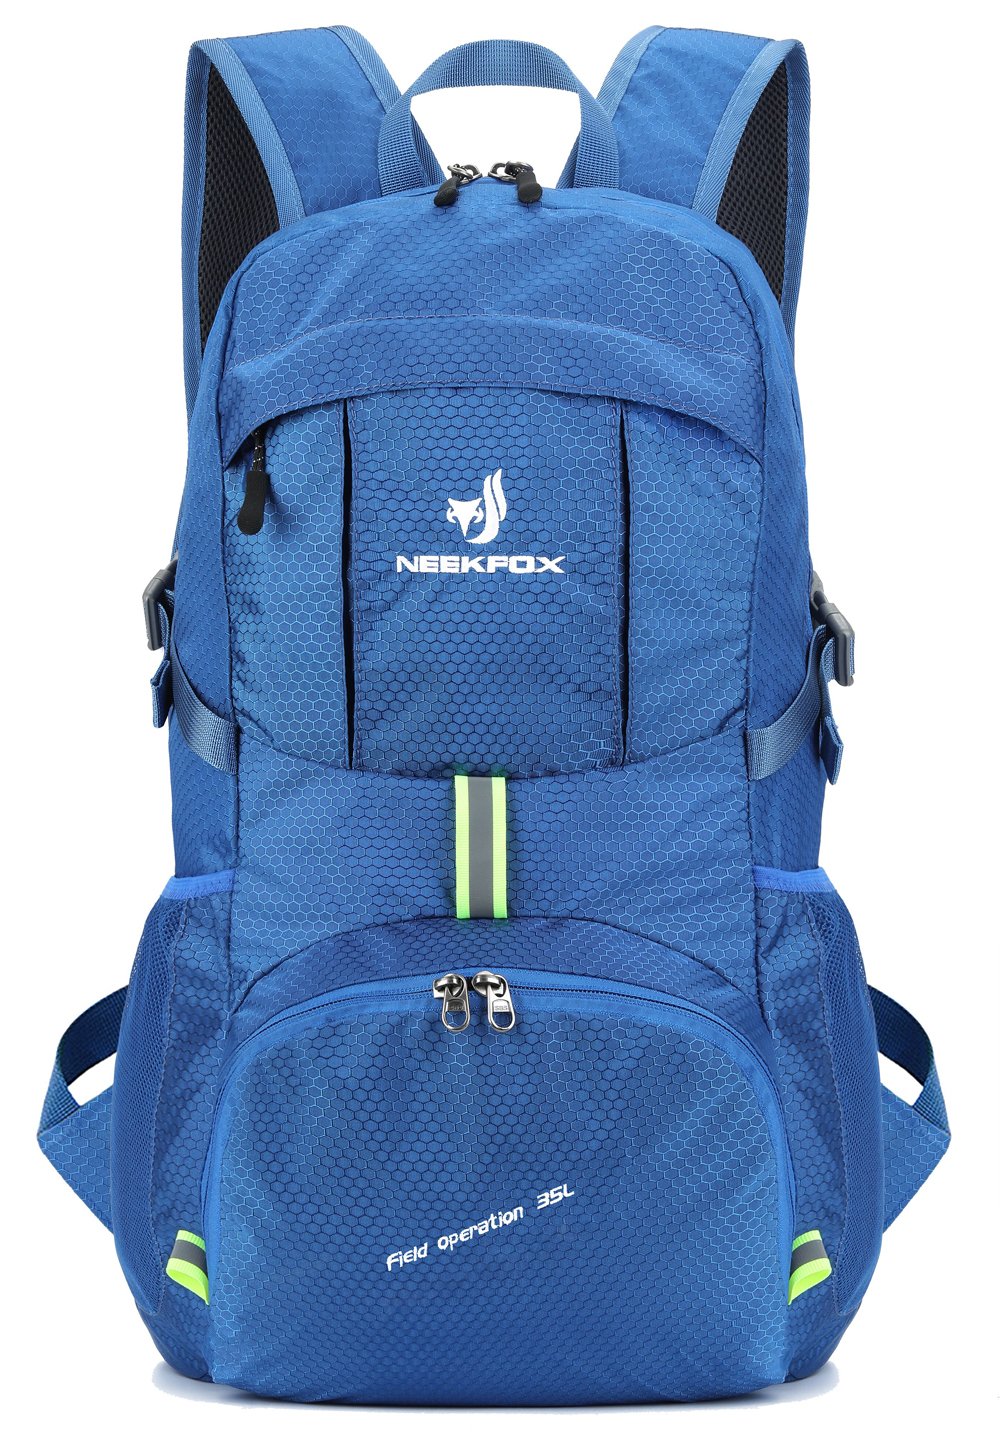 Packable Lightweight Hiking Daypack Travel Hiking Backpack Ultralight Foldable Backpack for Women Men